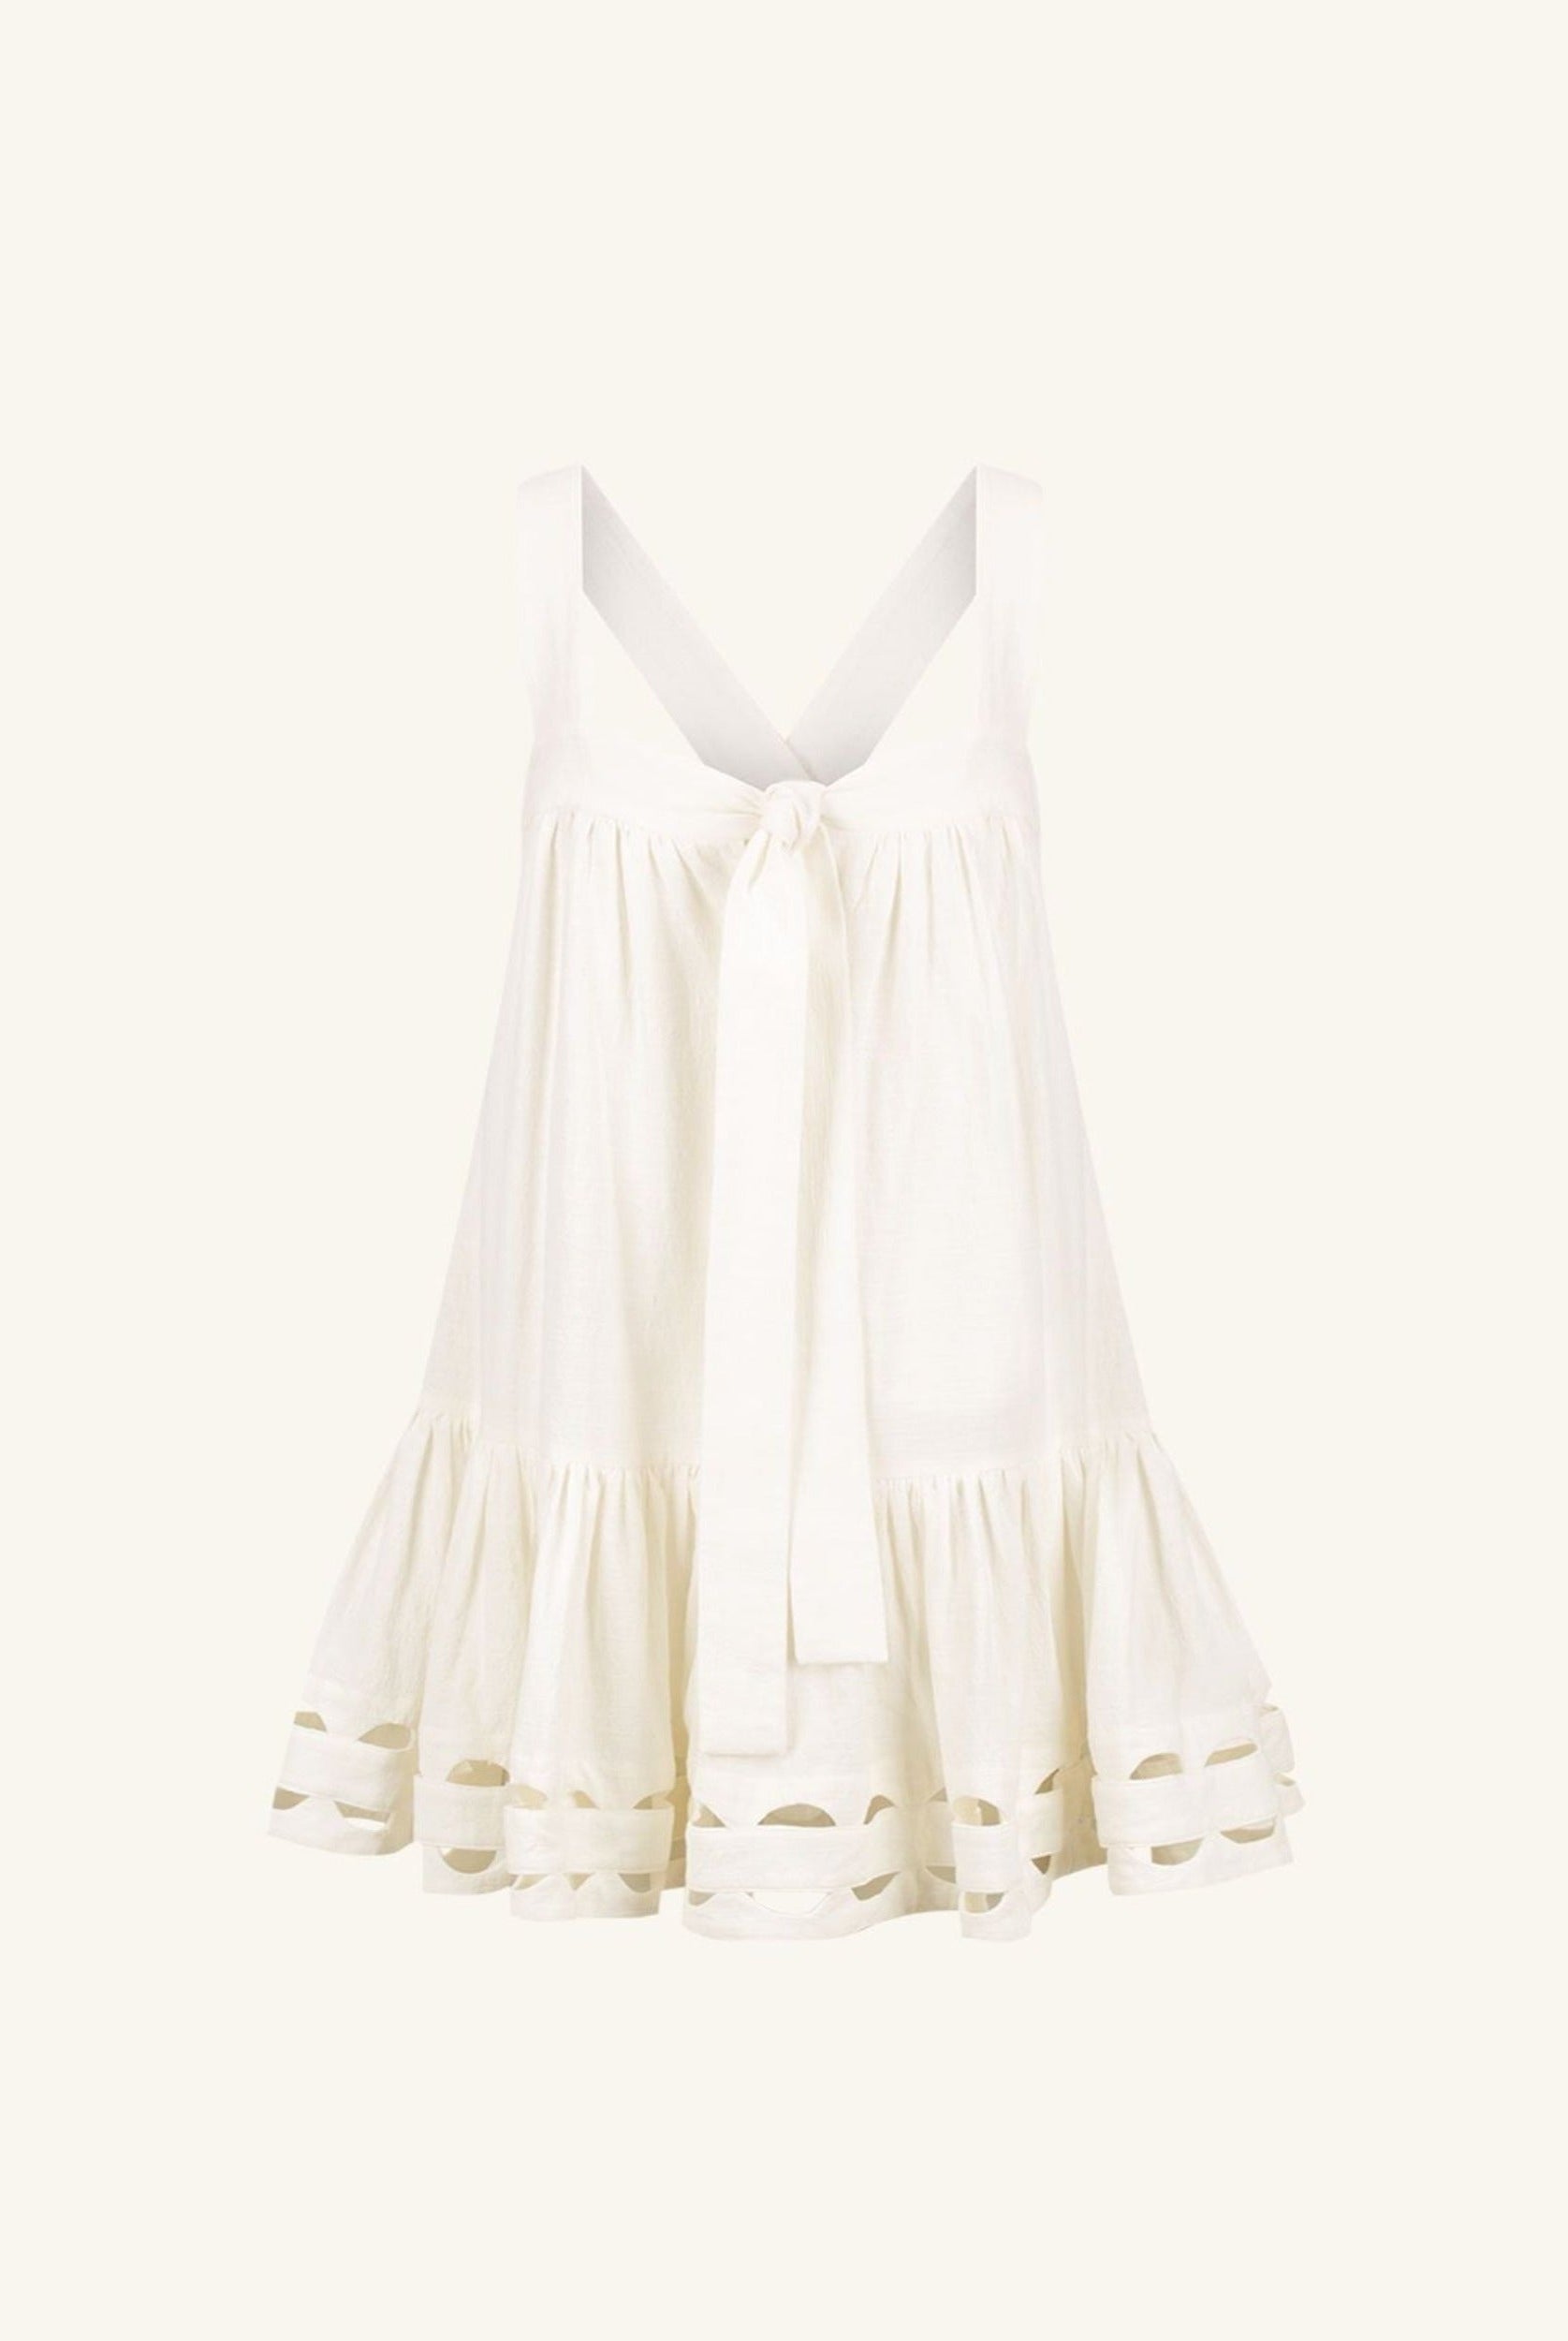 Shona Joy Julieta Mini Dress in white with cutout detail